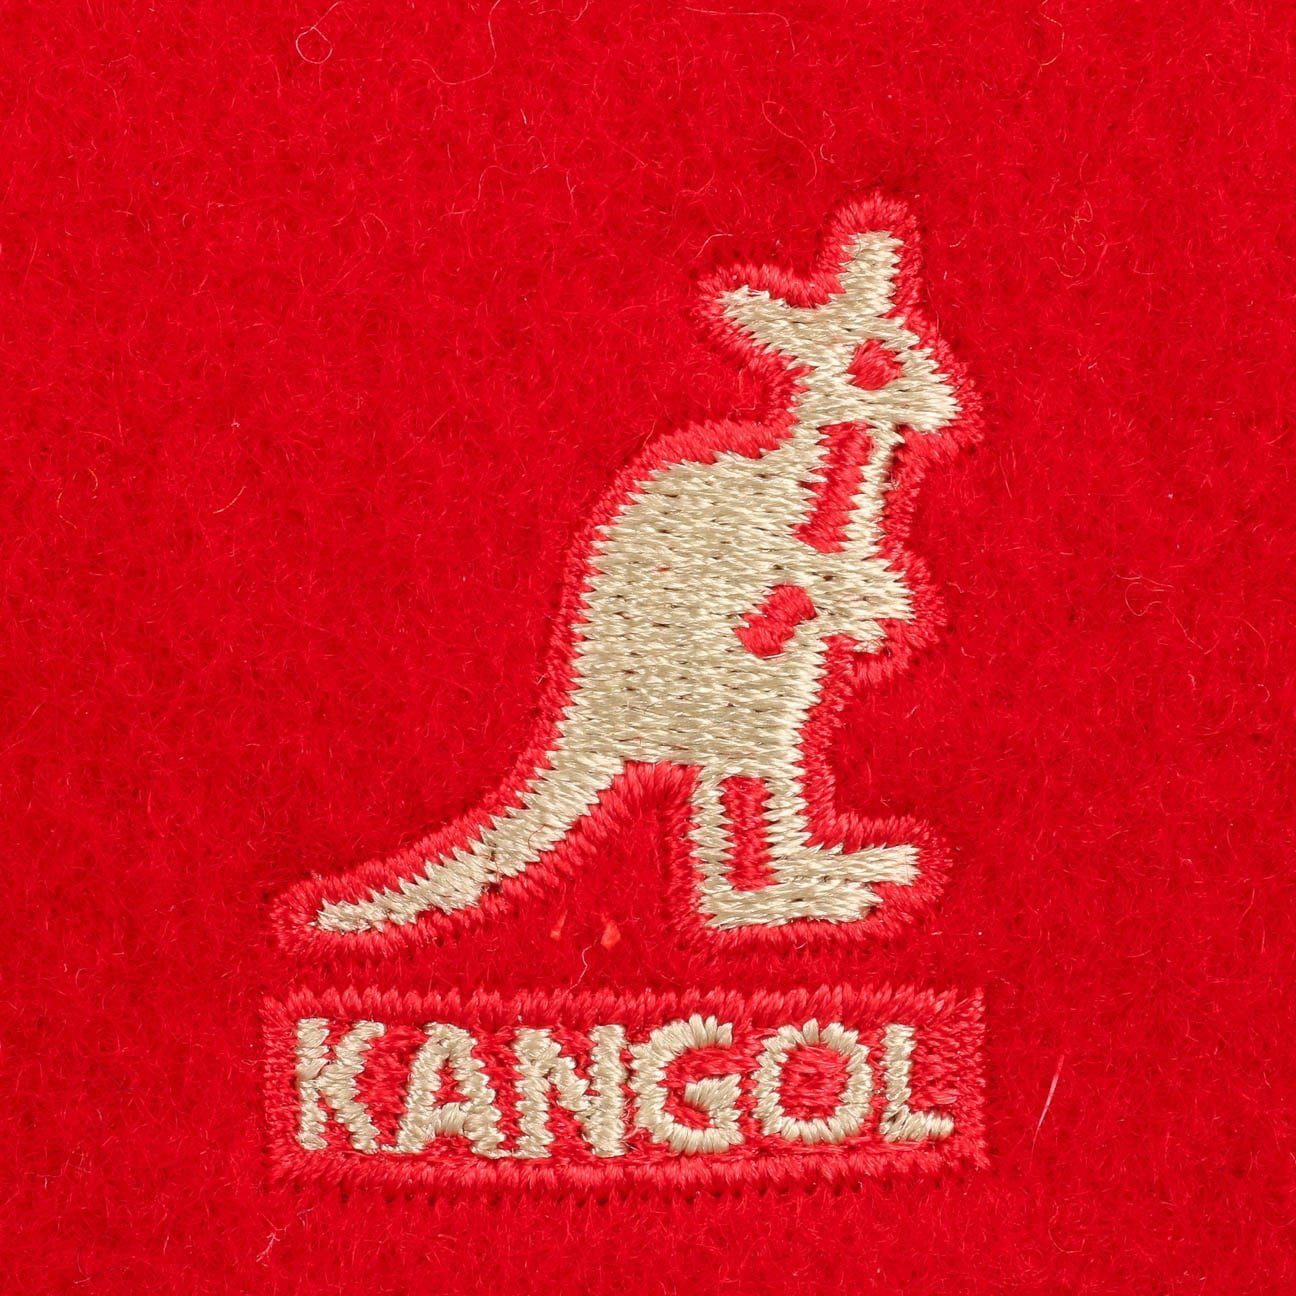 Flat Kangol (1-St) Schirm Schiebermütze Cap rot mit